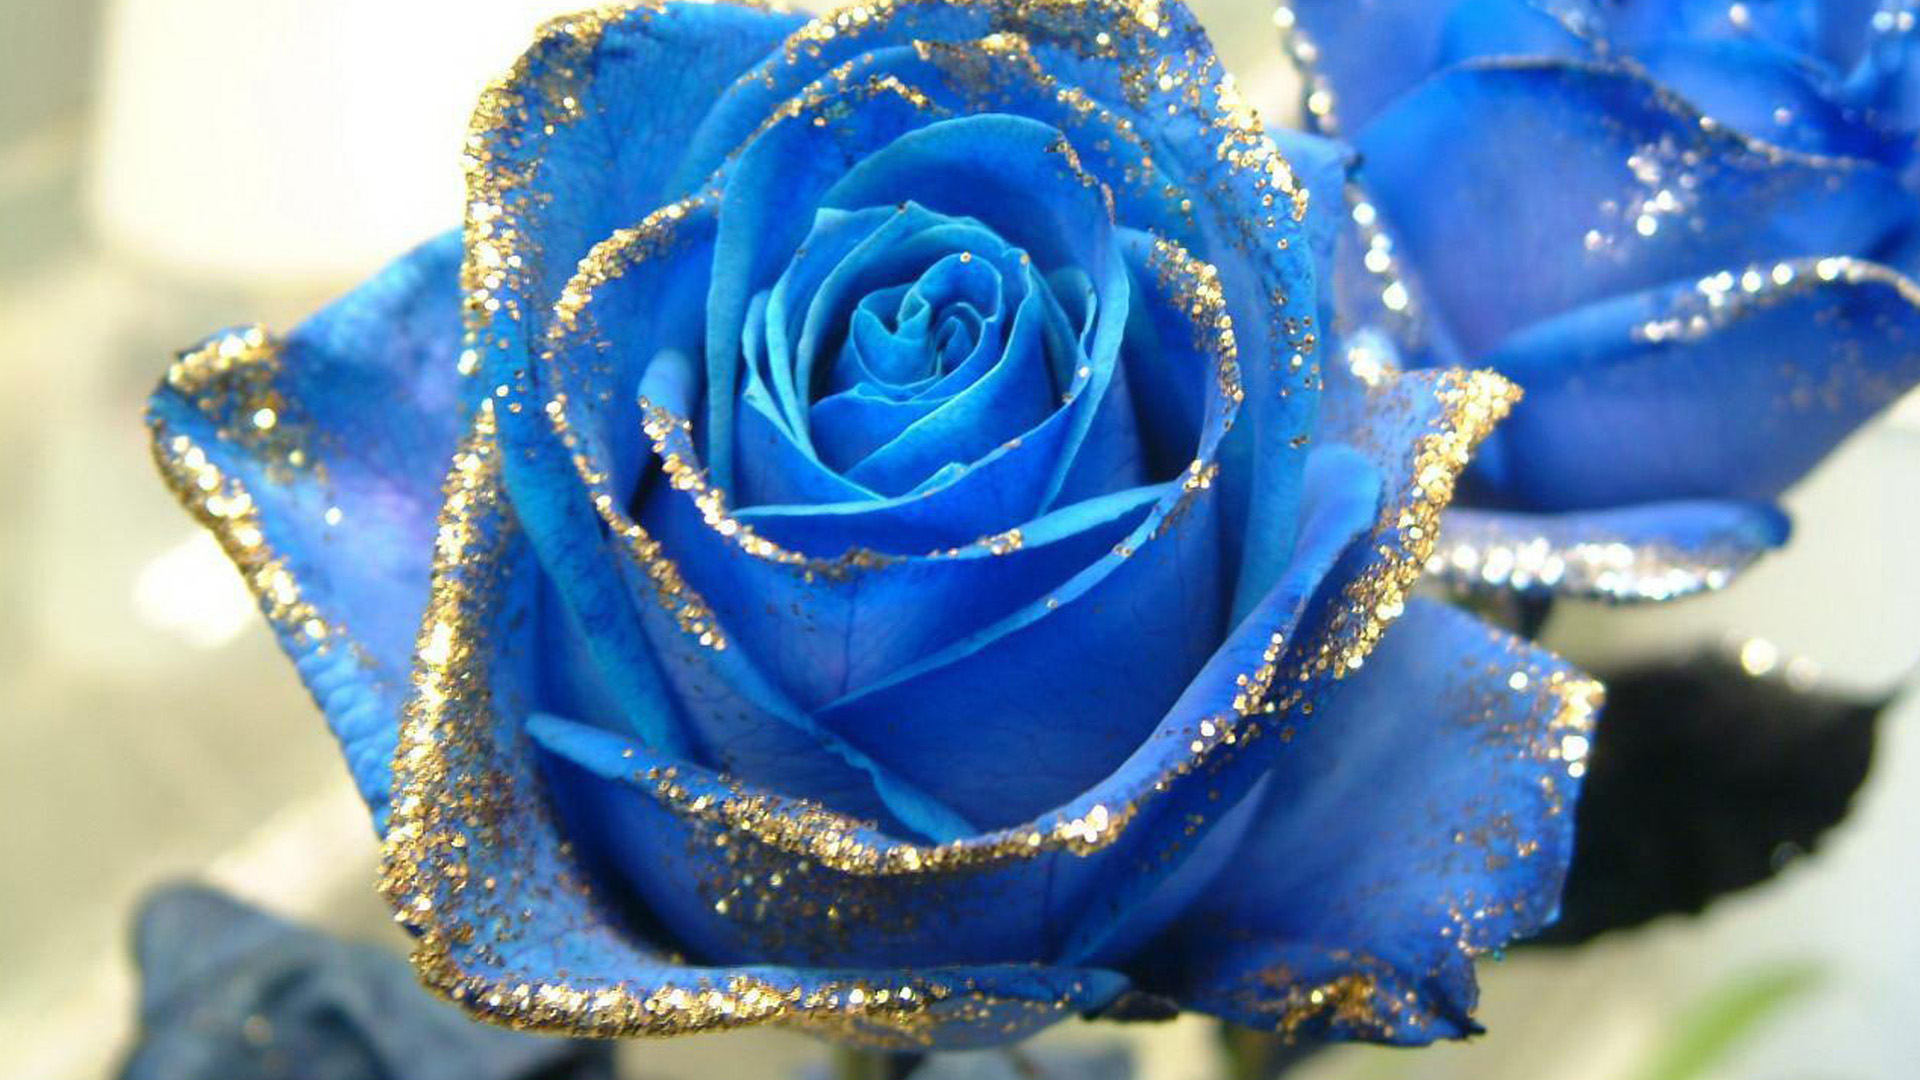 The most beautiful blue roses wallpaper - Rose wallpaper